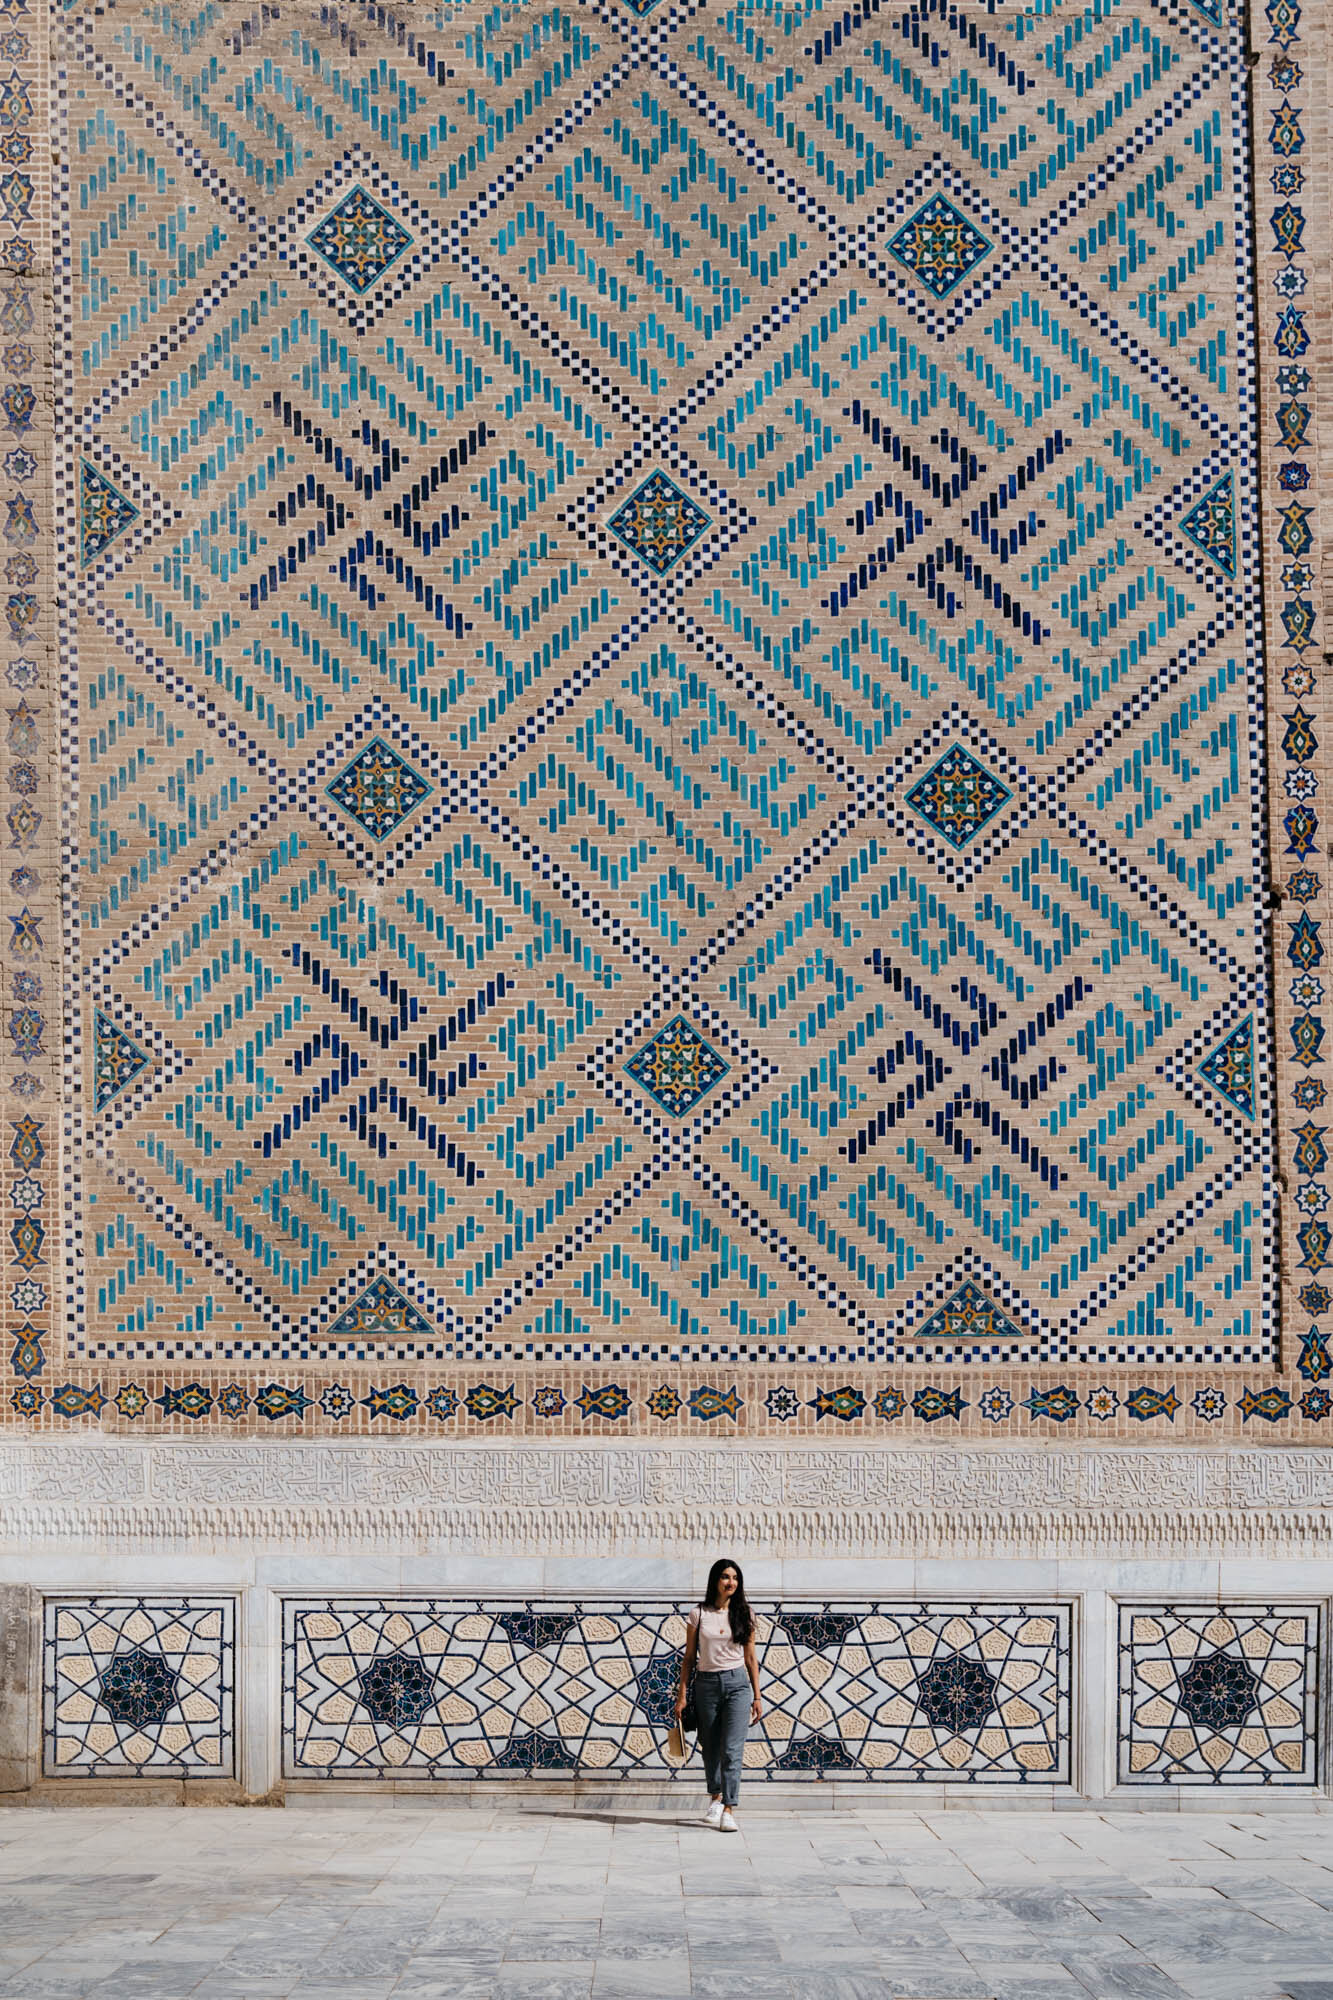  Details from the Bibi-Khanym Mosque, Samarkand 